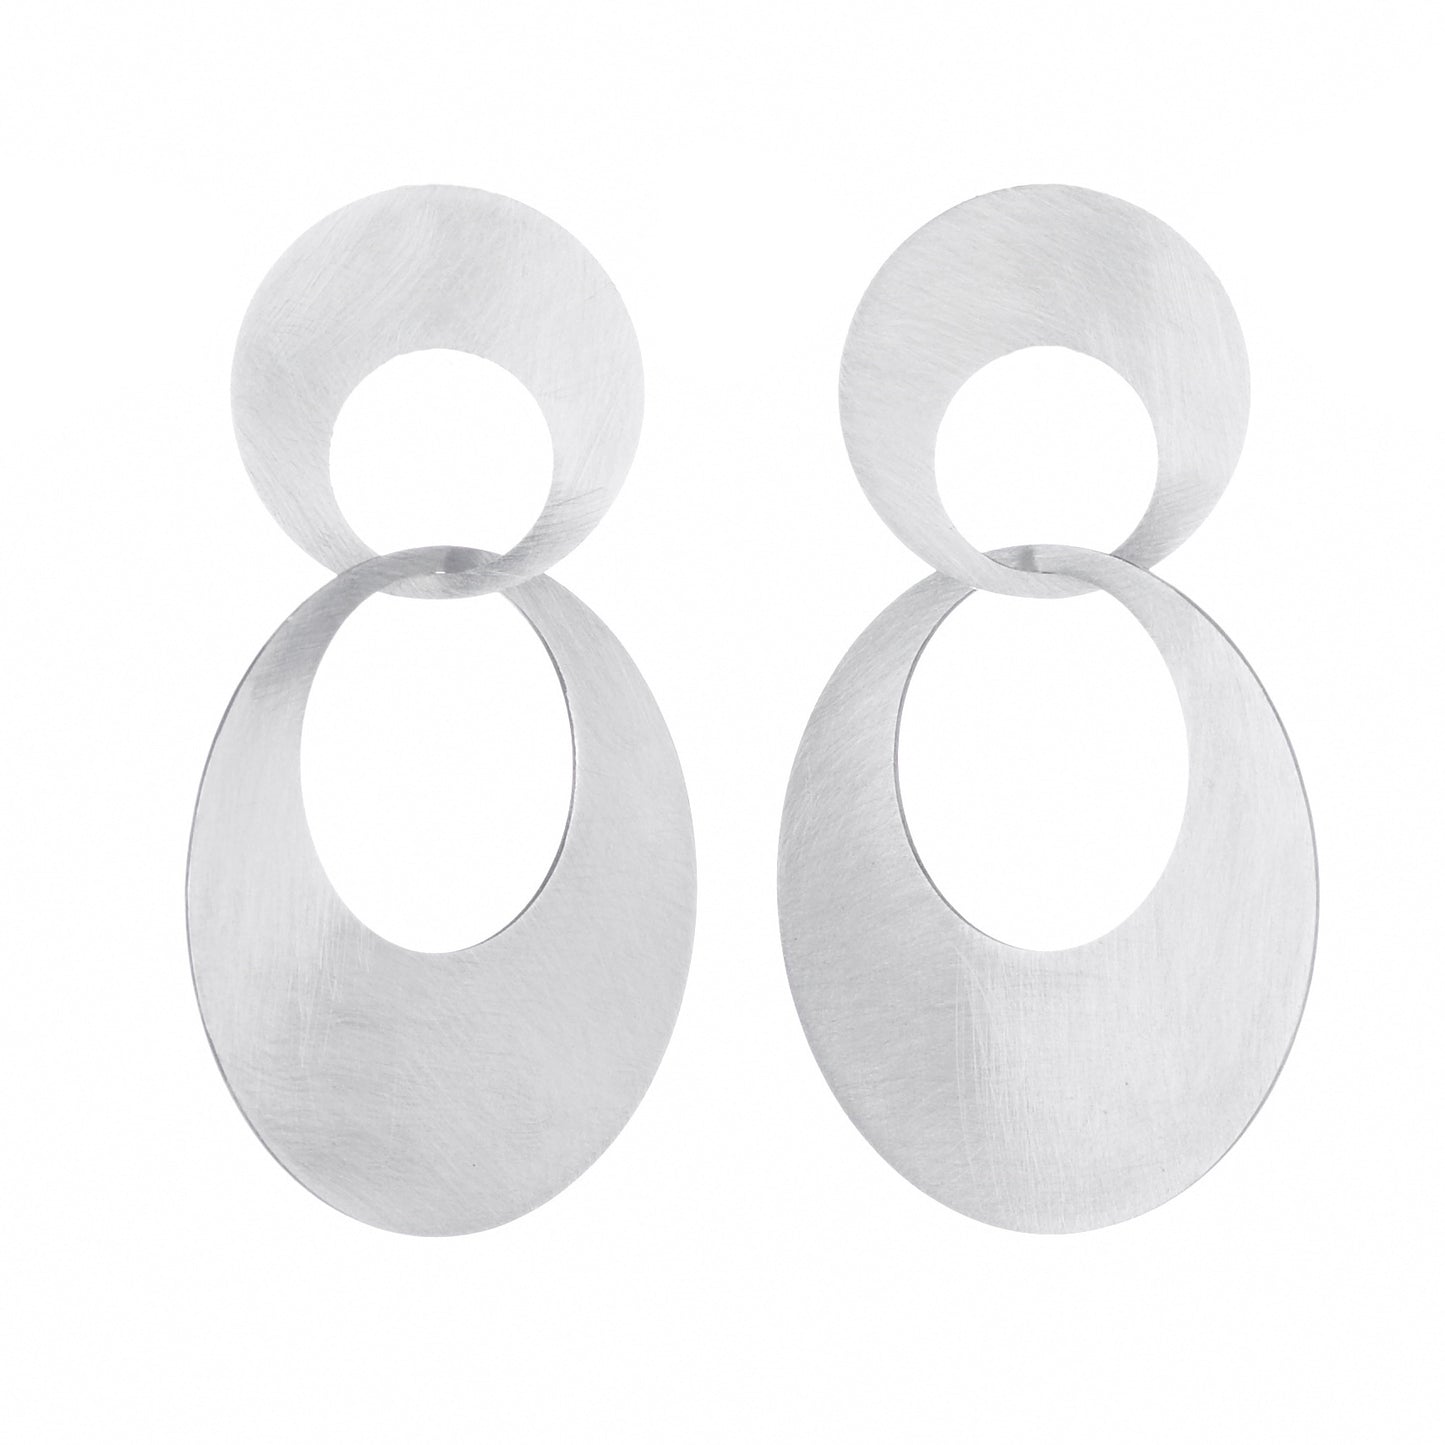 Interlocking Circle Earrings